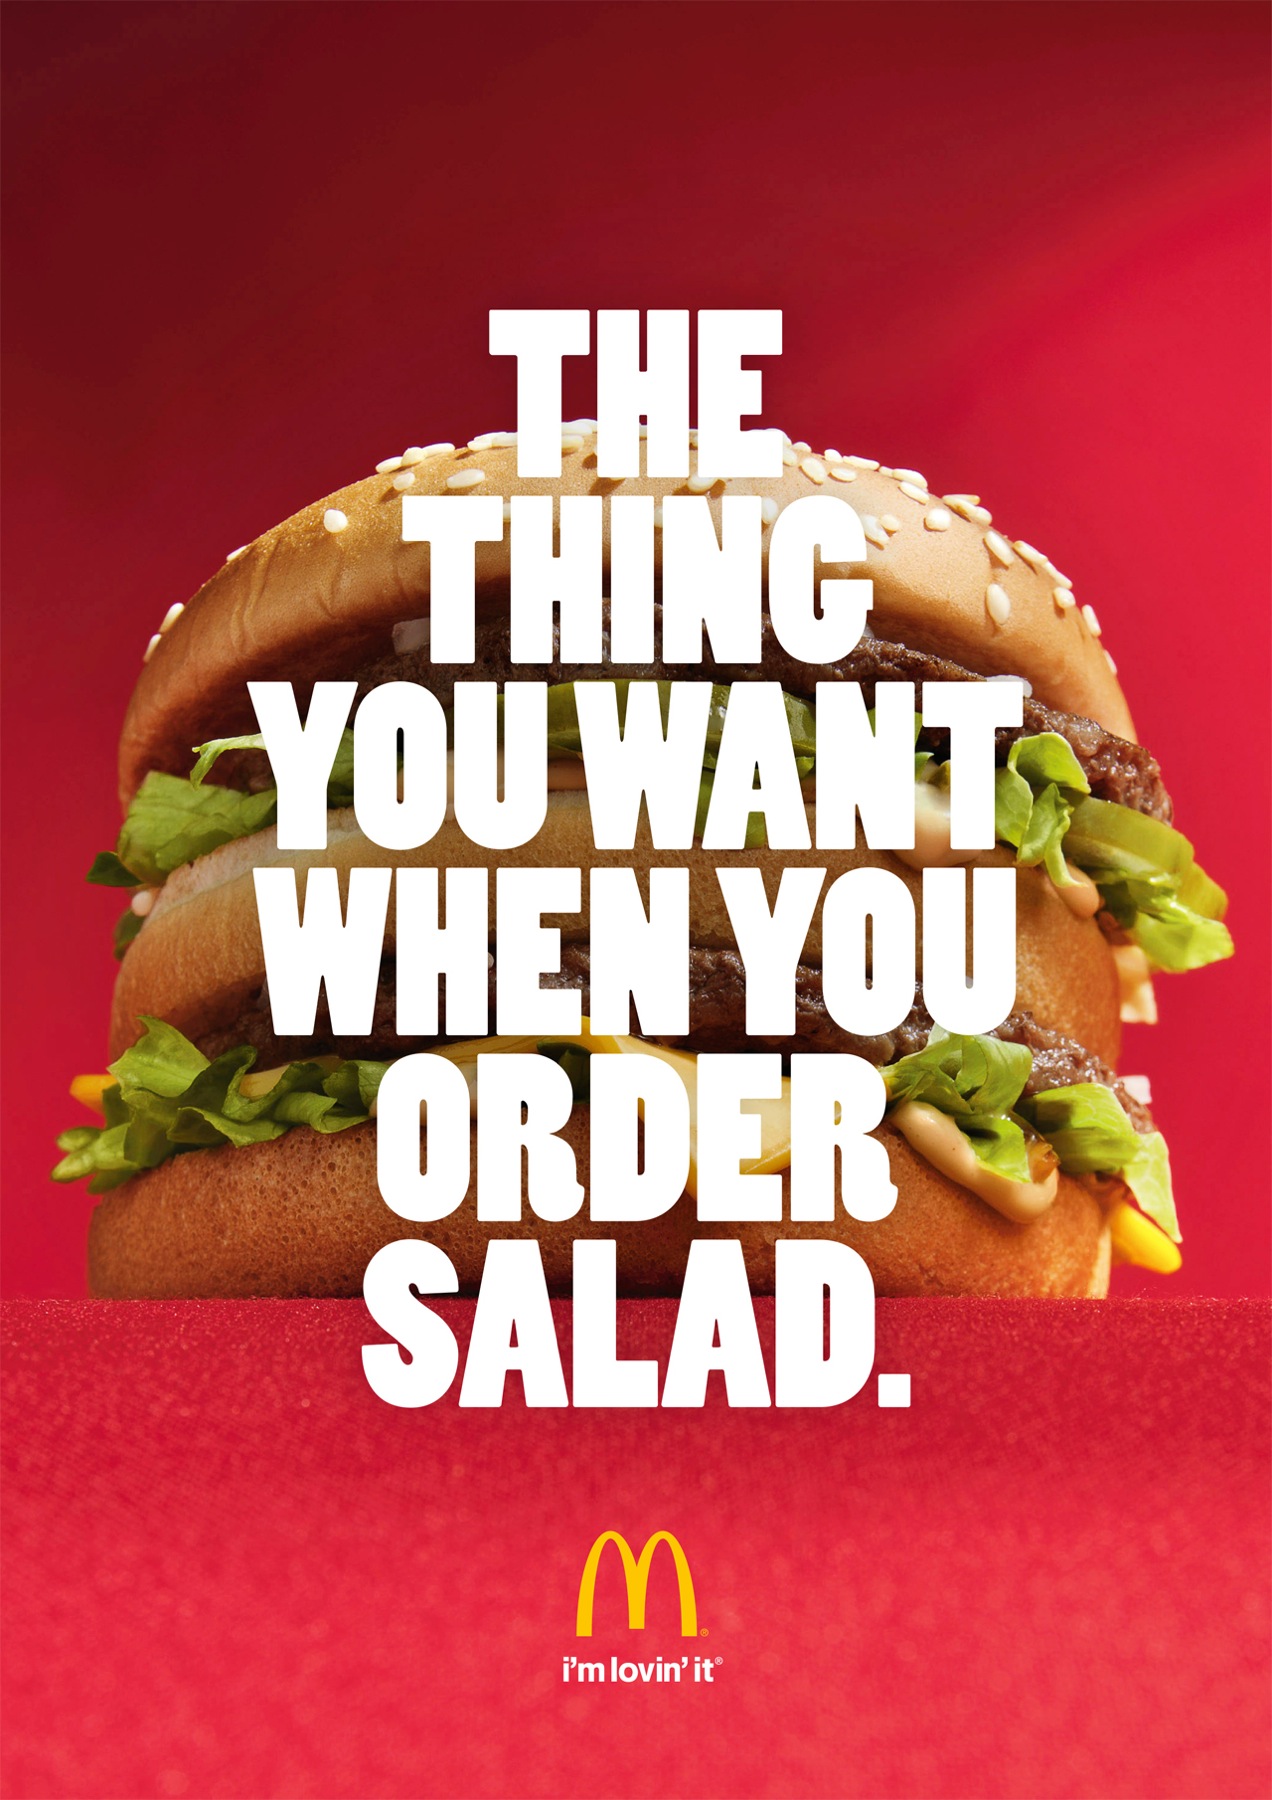 salad | Mcdonalds IDEAS GR8 ad MARKETING print